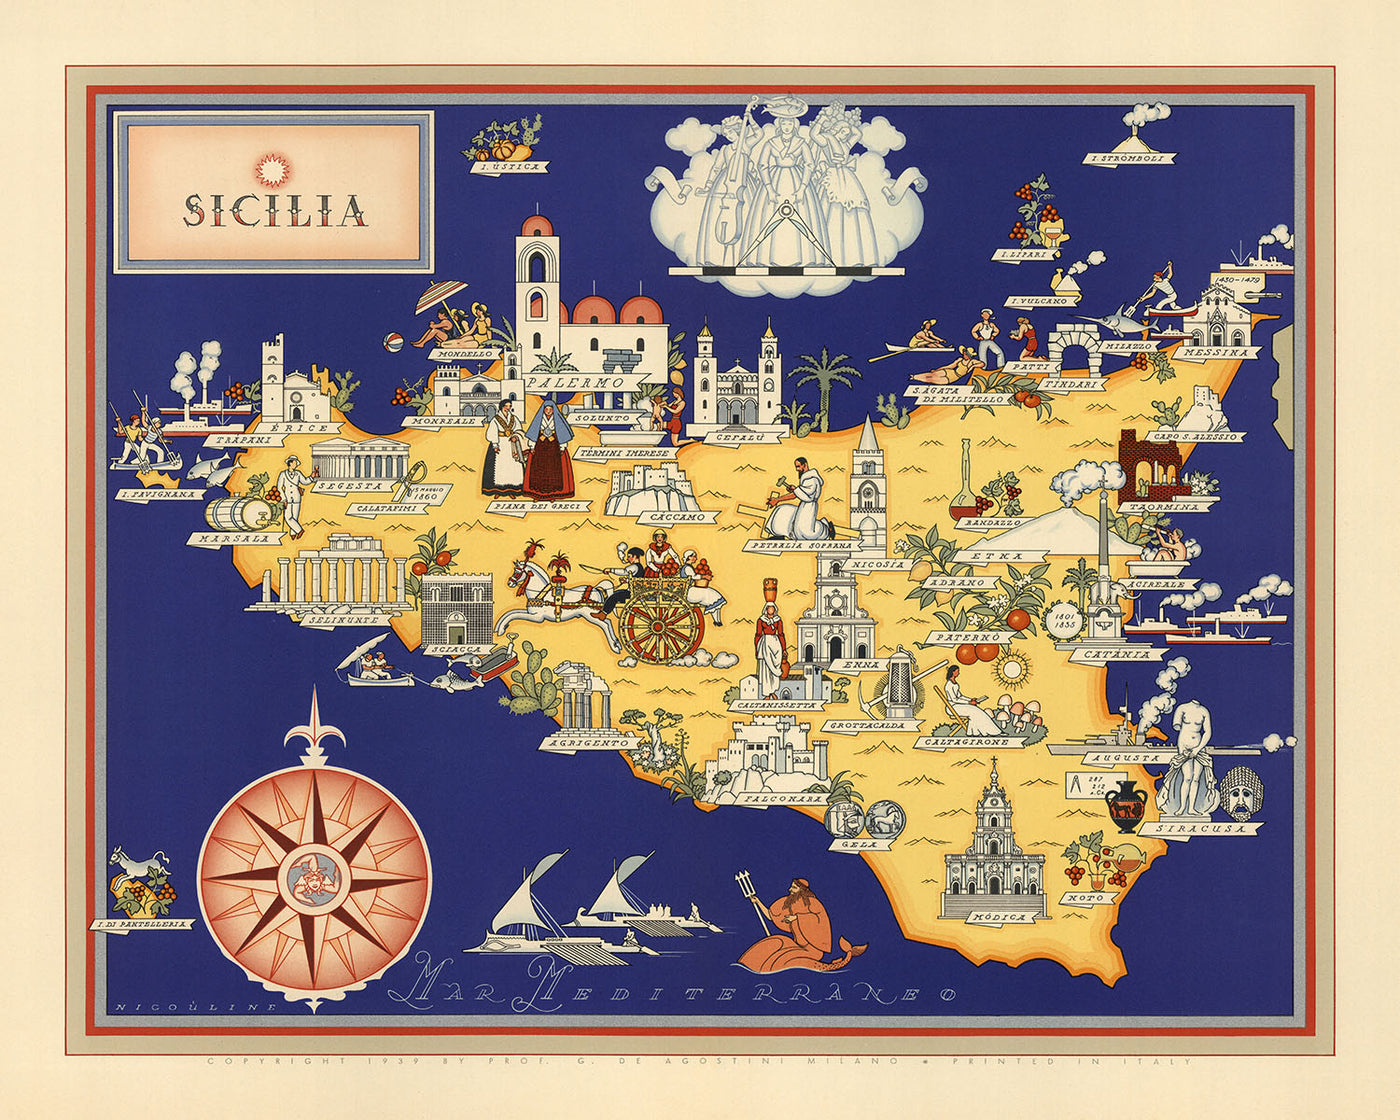 Ancienne carte picturale de la Sicile par De Agostini, 1938 : Palerme, Catane, Messine, Parco Nazionale dell'Etna, Parco Nazionale dei Nebrodi